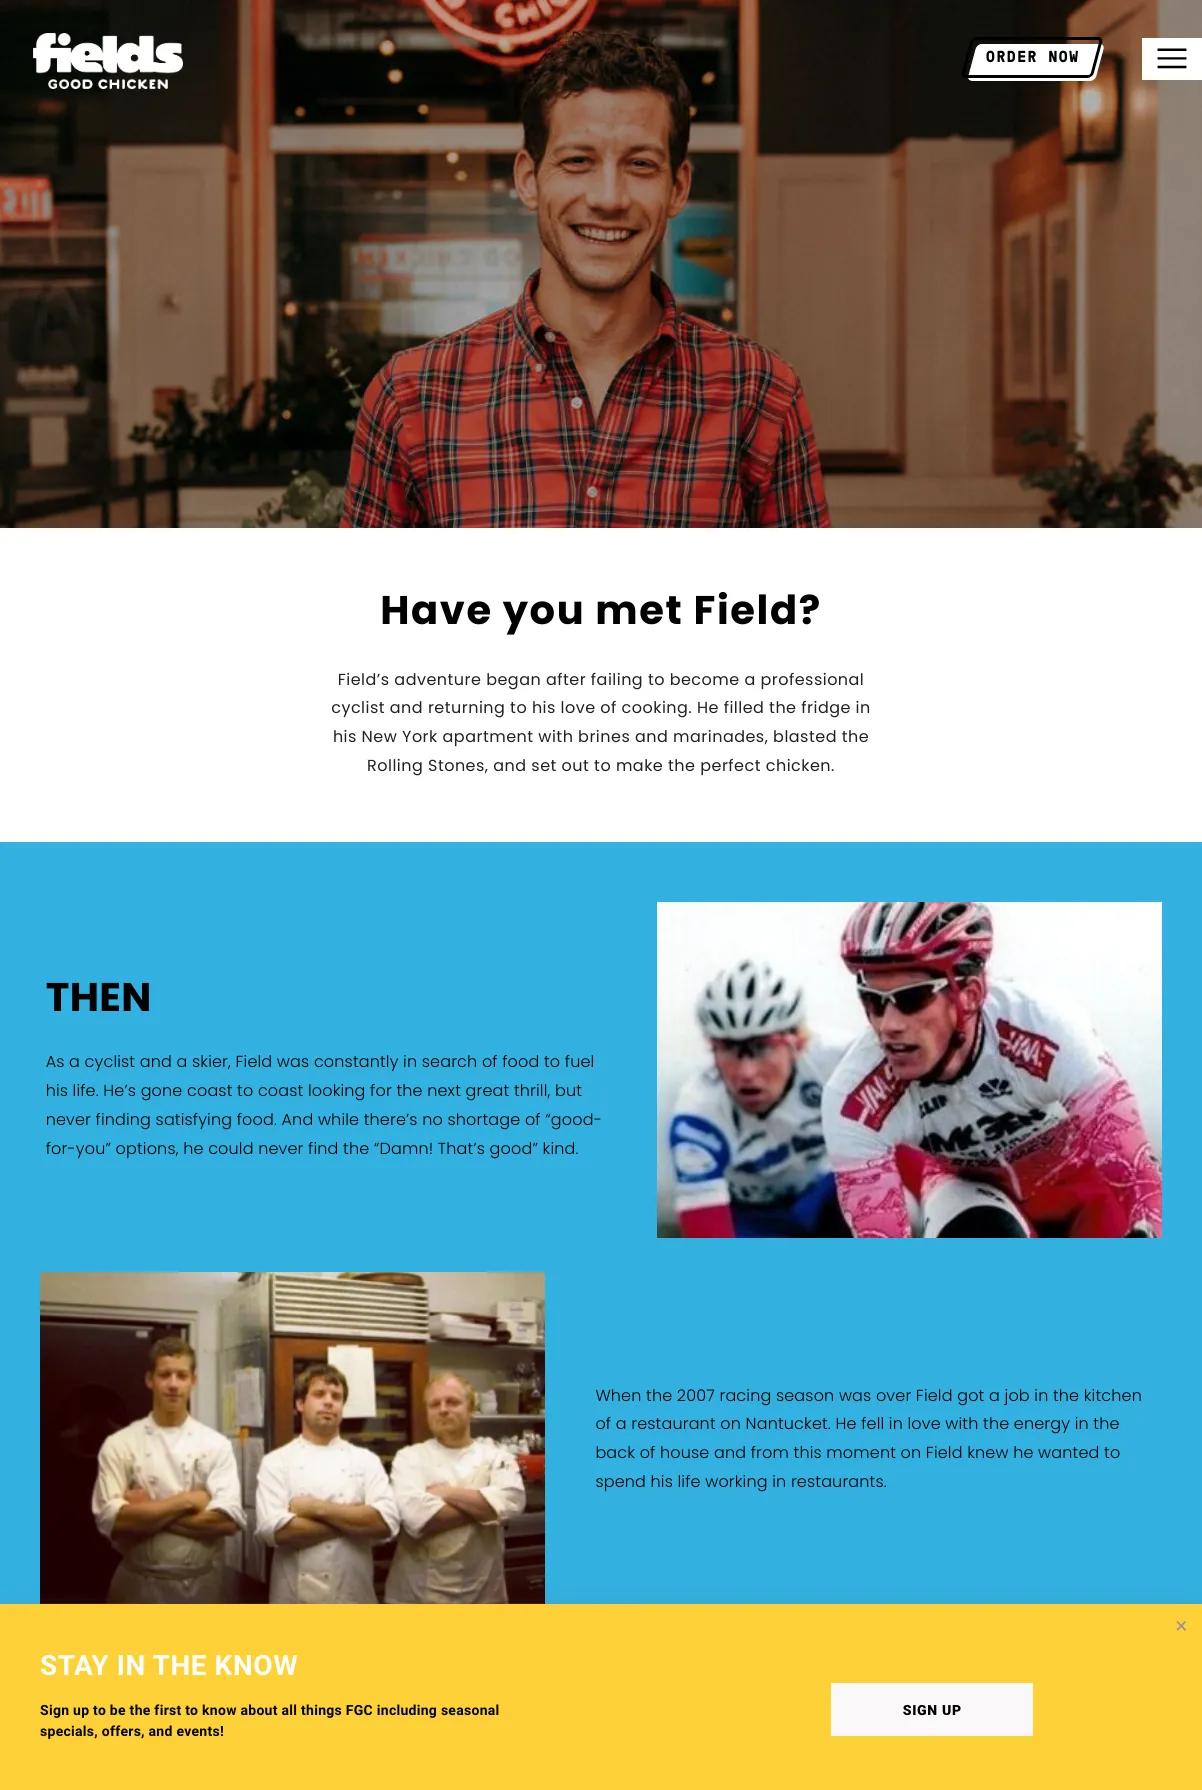 Screenshot 3 of Fields Good Chicken (Example Squarespace Restaurant Website)